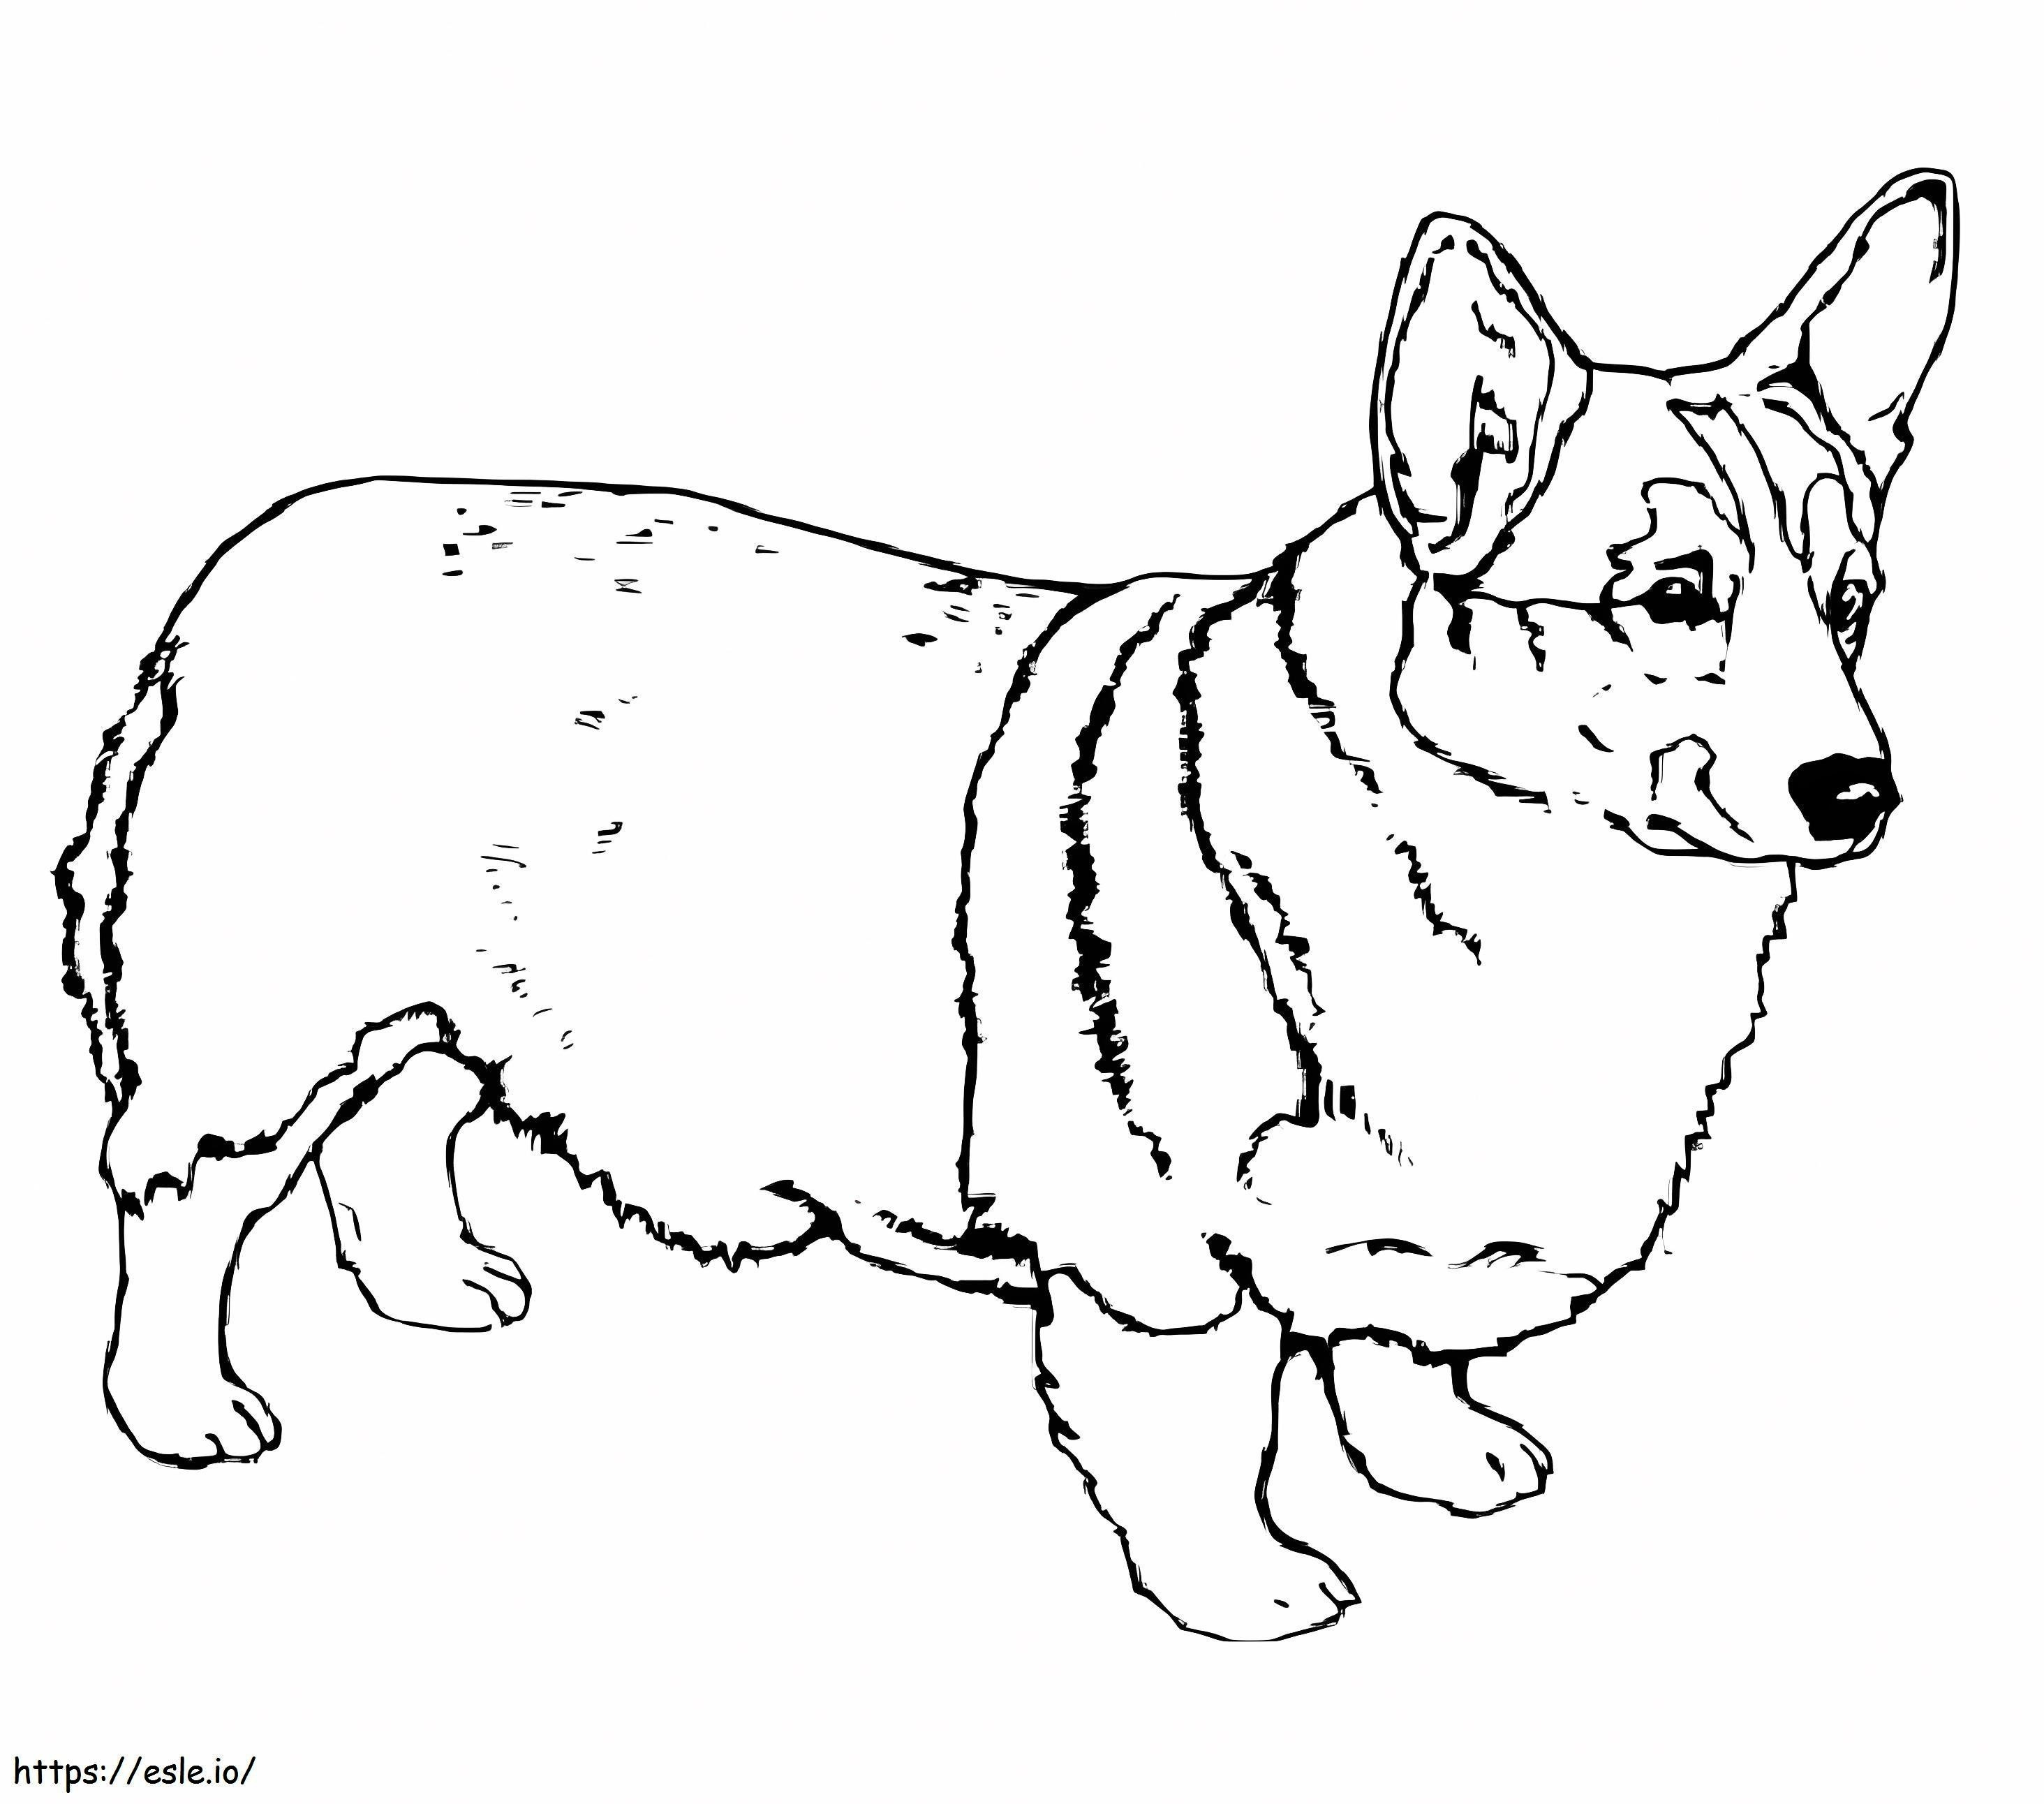 Corgi Dog coloring page